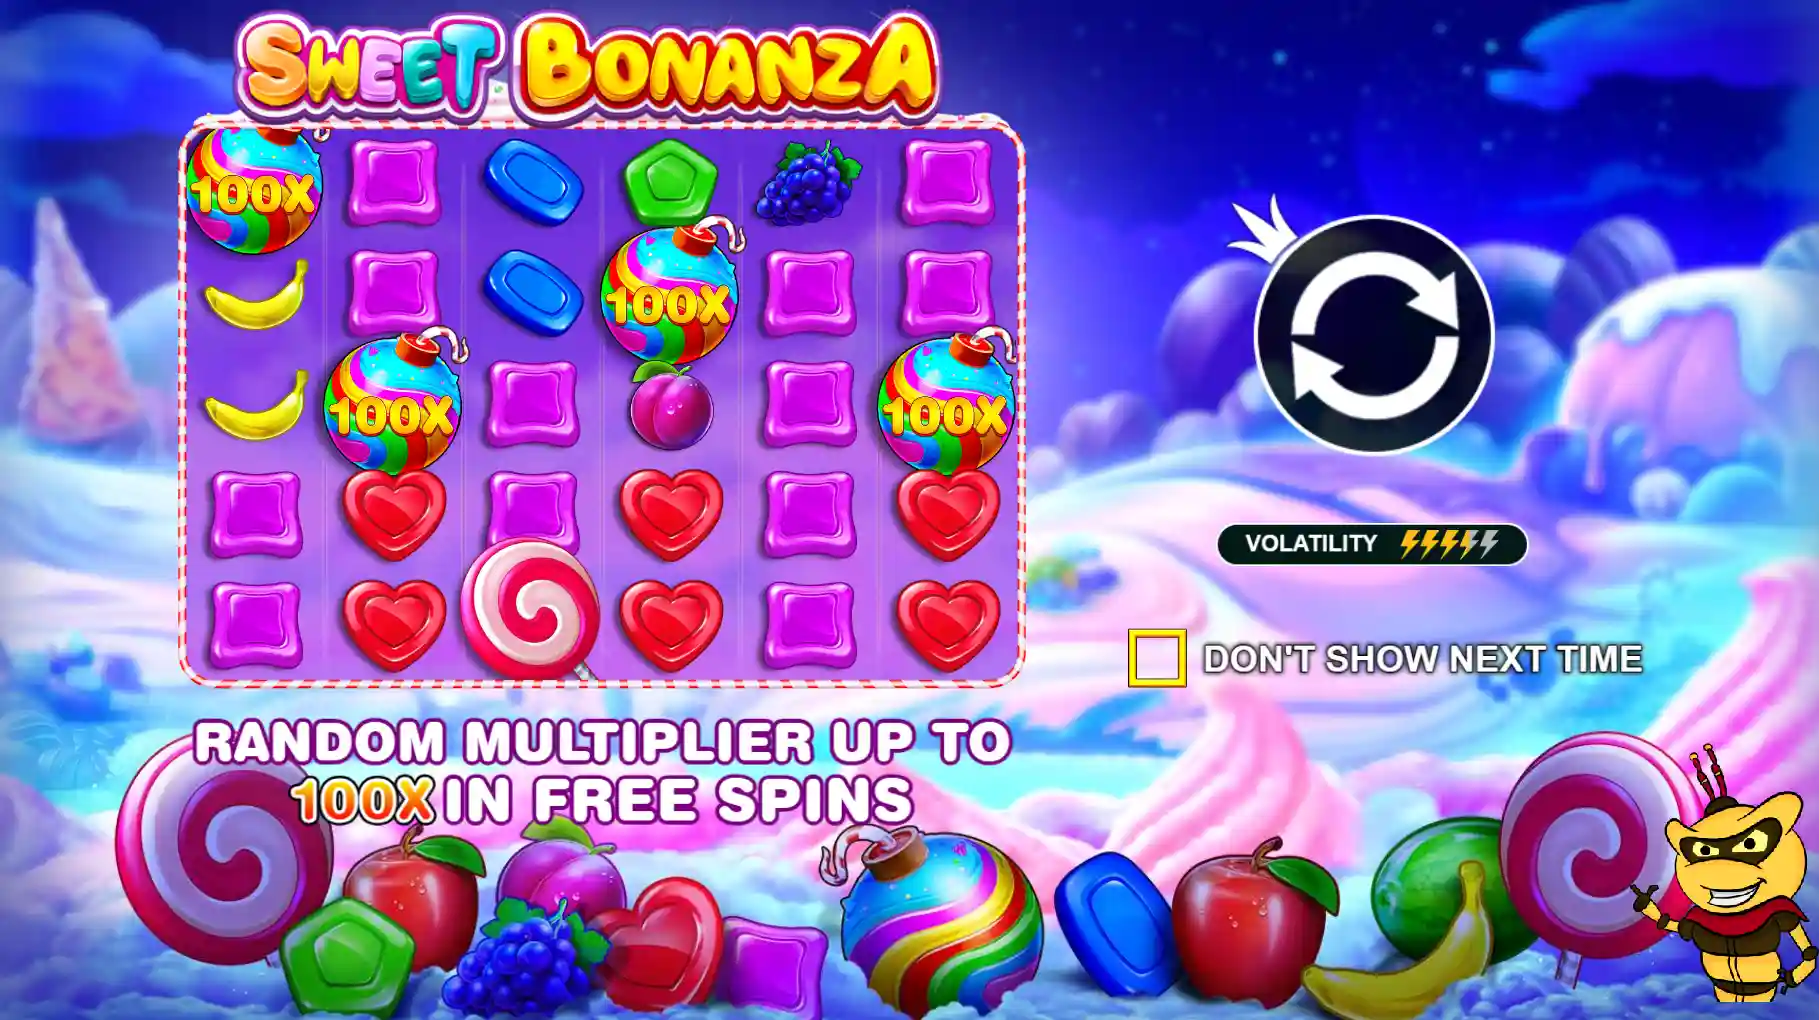 Sweet Bonanza Gameplay and Design
